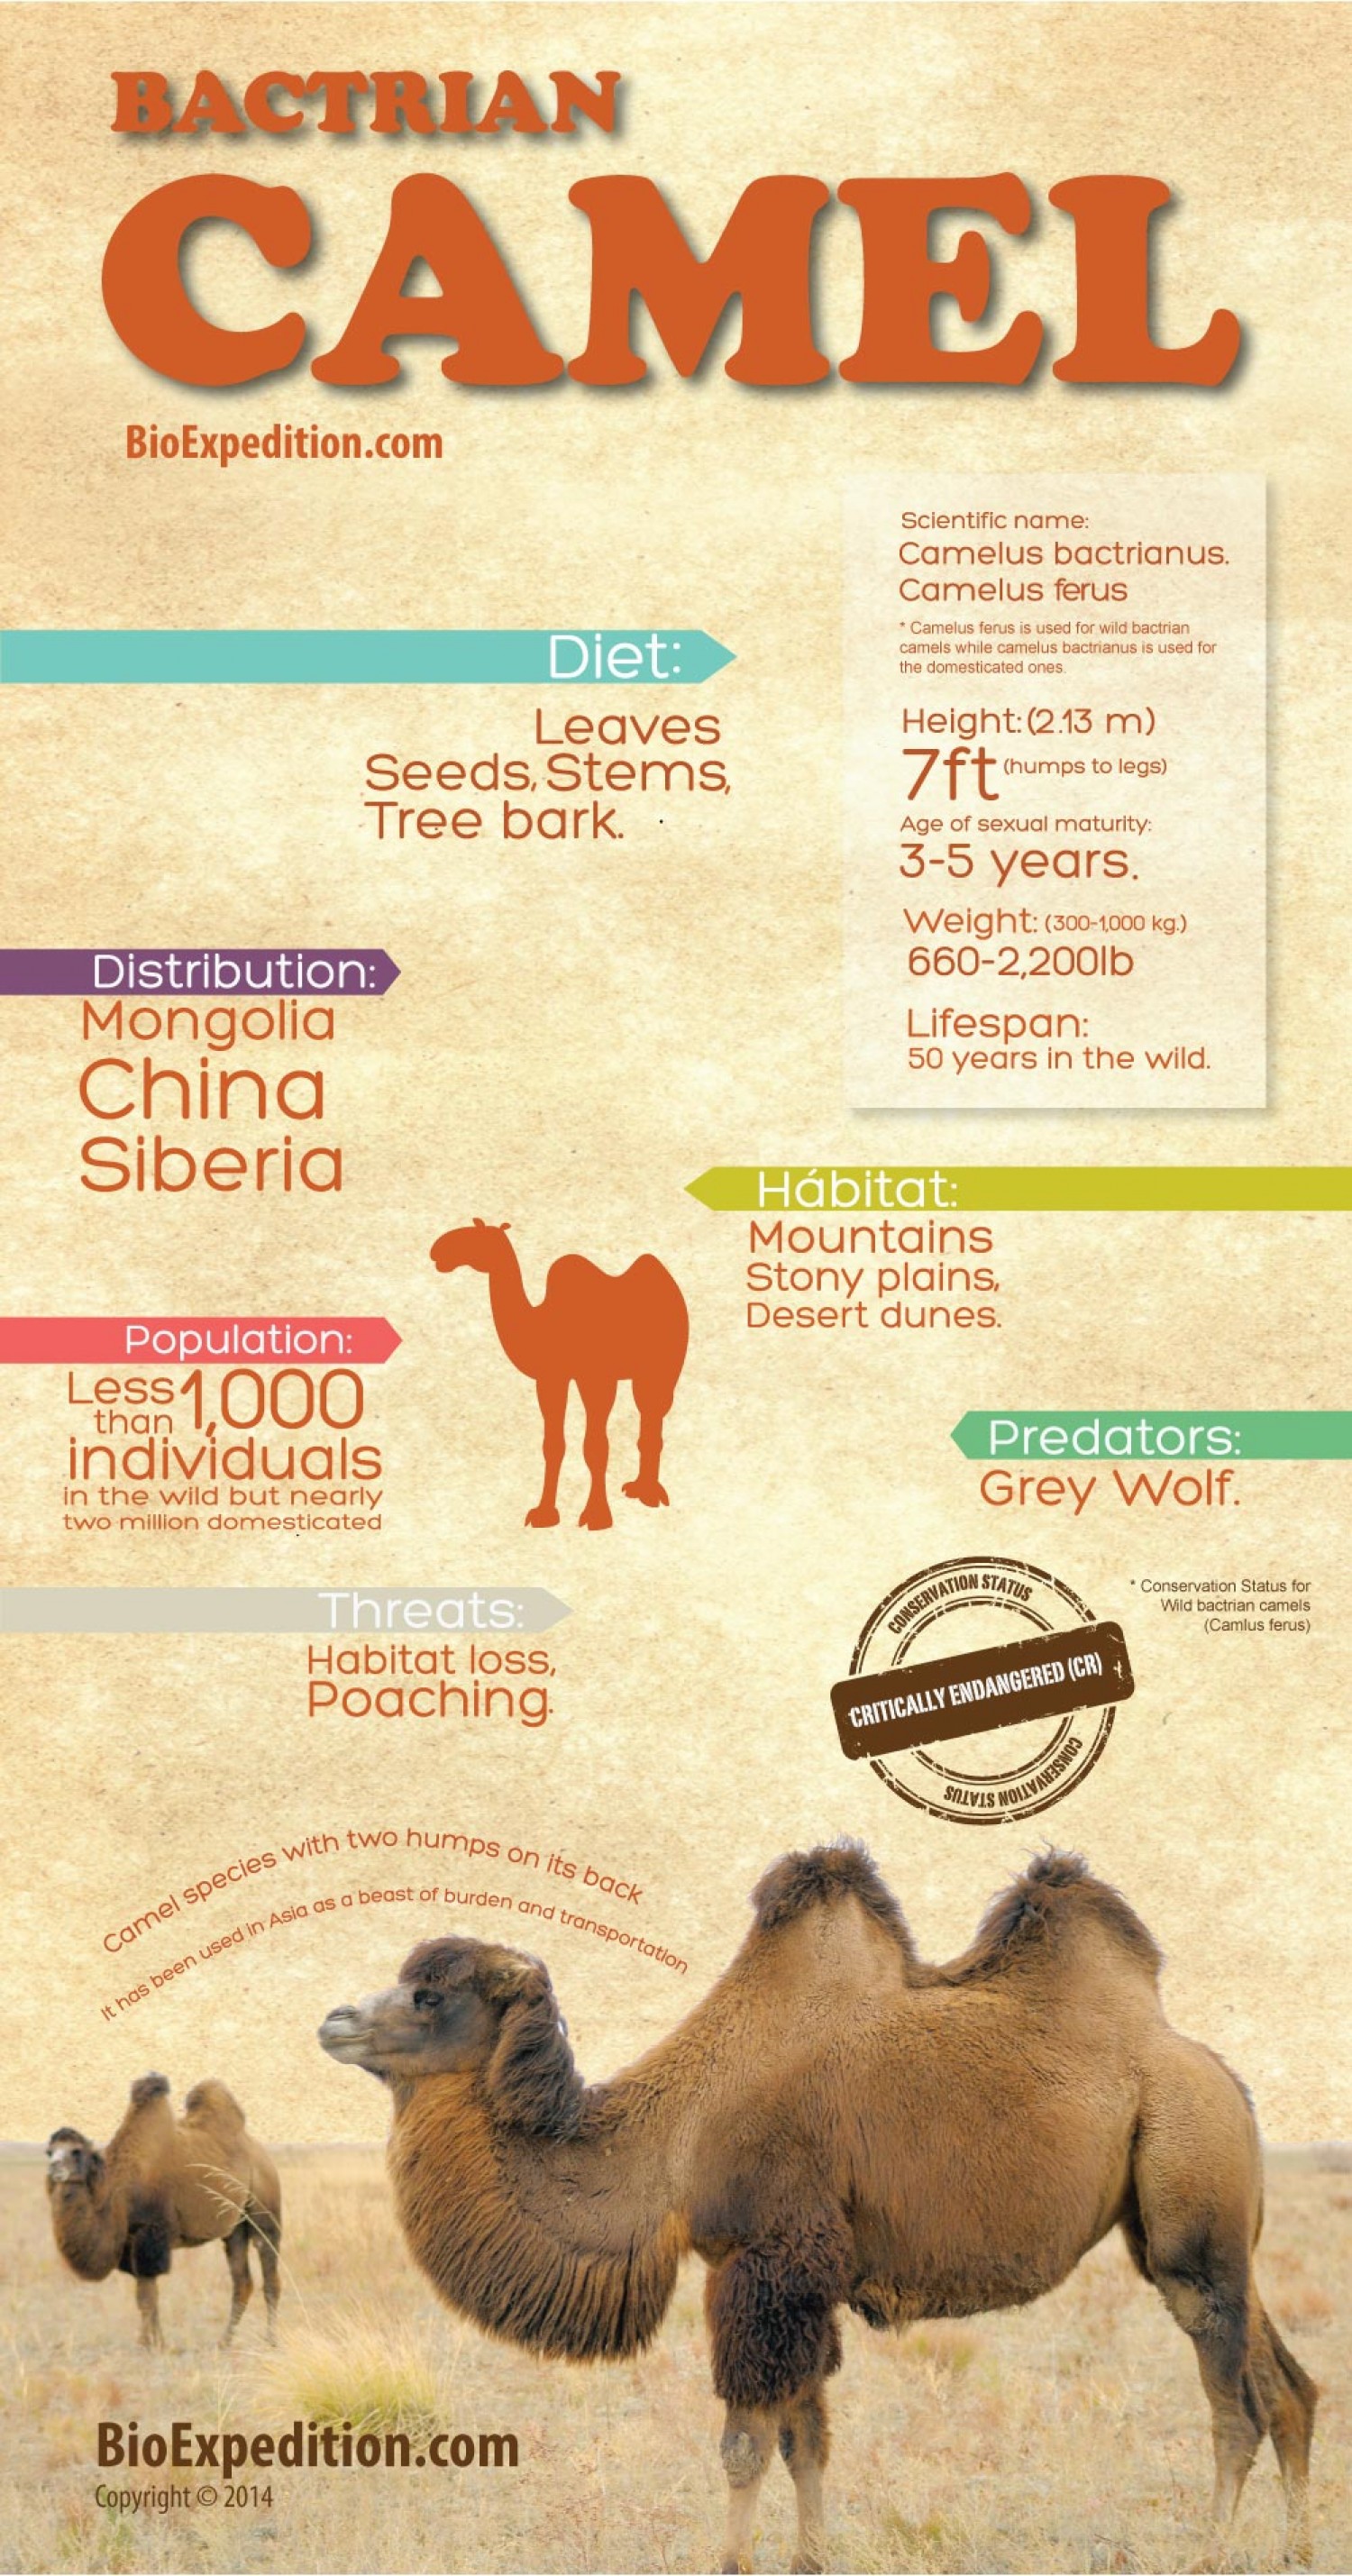 bactrian-camel--infographic_5367b07a3ae38_w1500.jpg